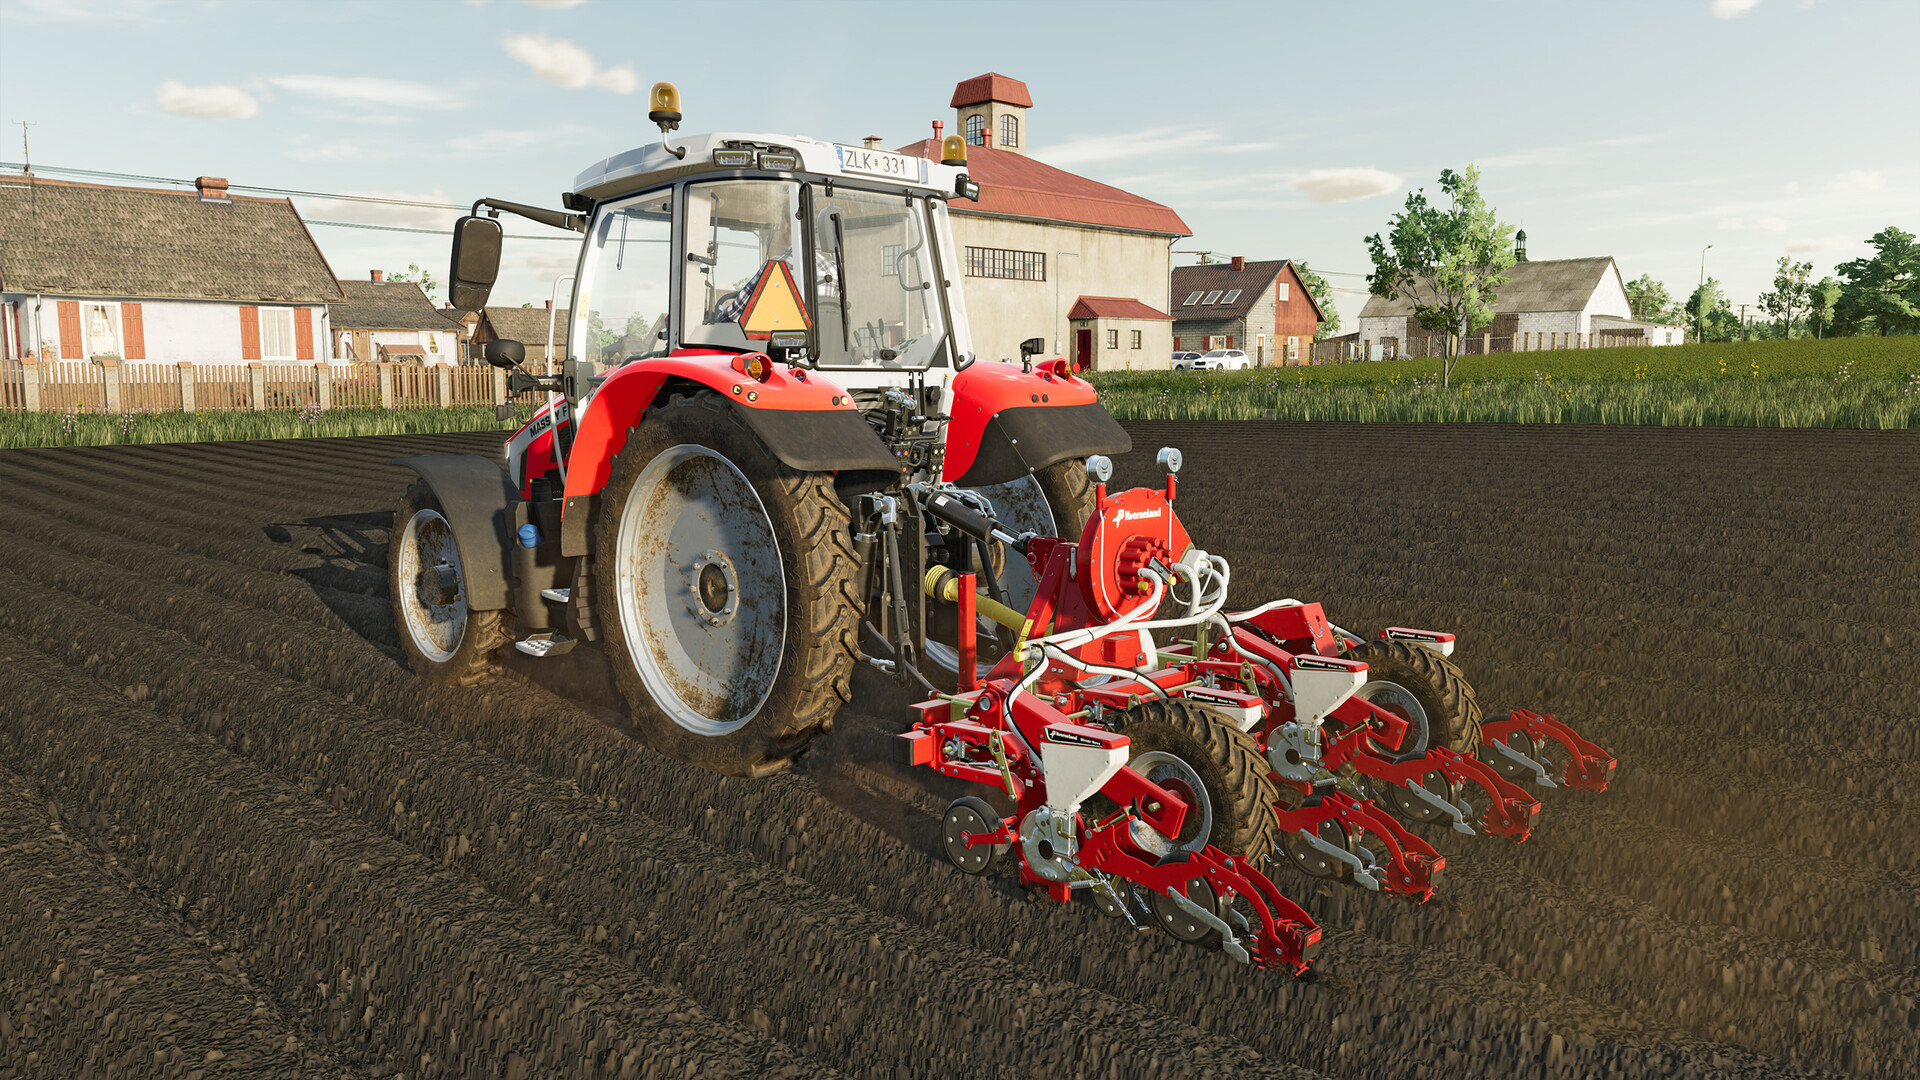 Farming Simulator 22 - Premium Expansion DLC EU Steam CD Key